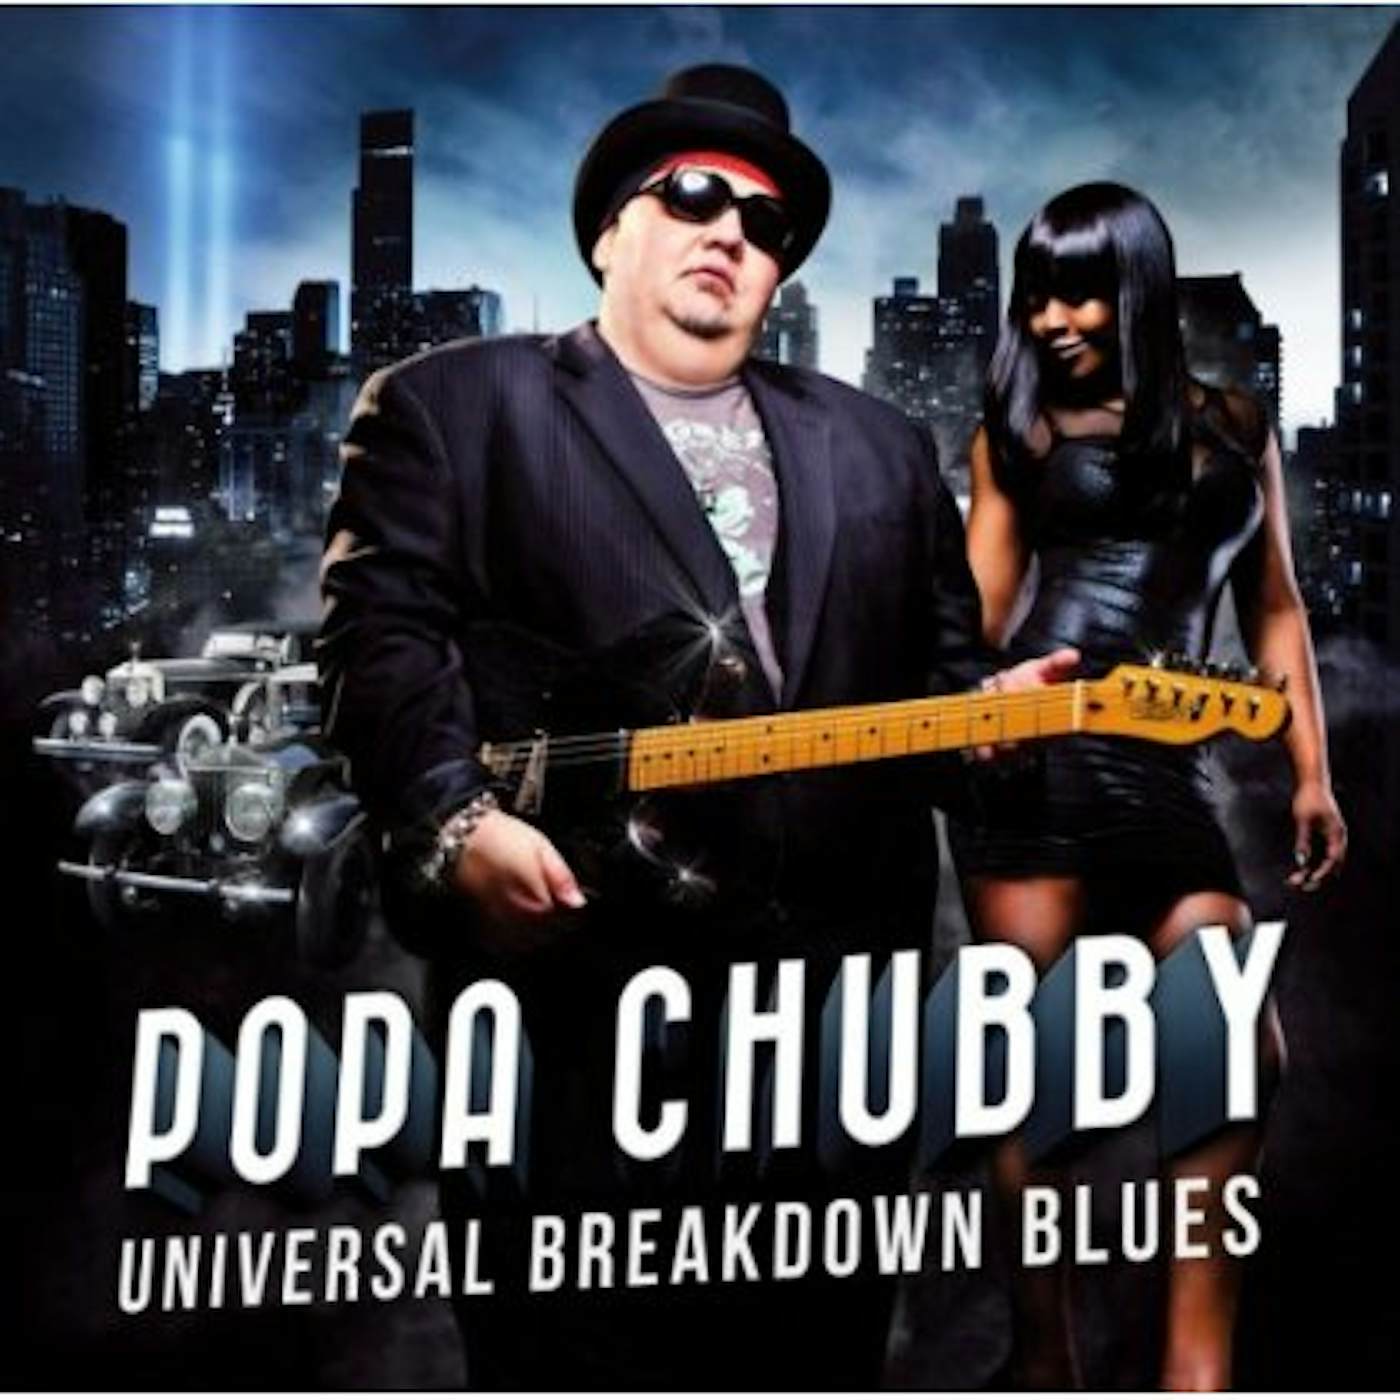 Popa Chubby Universal Breakdown Blues Vinyl Record